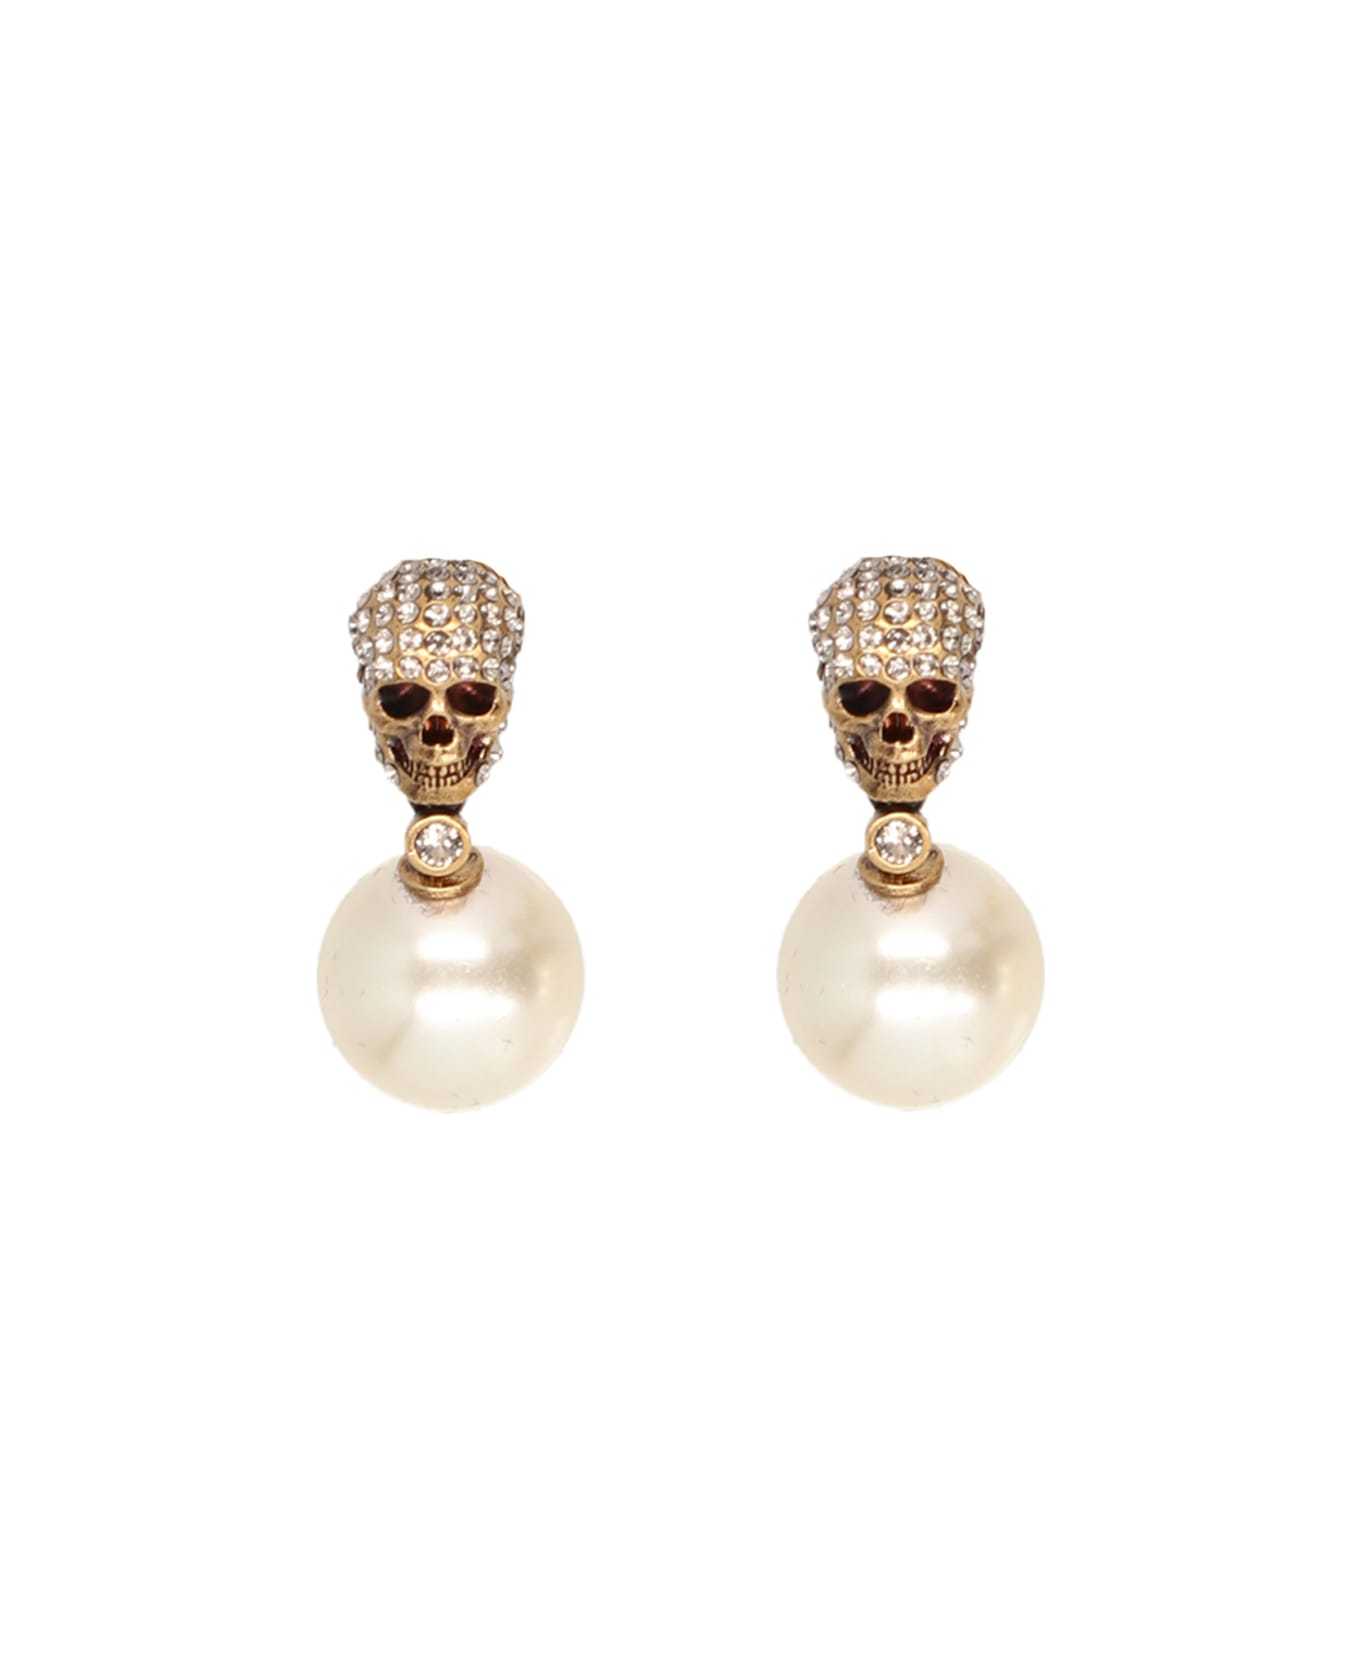 Alexander McQueen Pearl Skull Earrings In Antiqued Gold - Gold